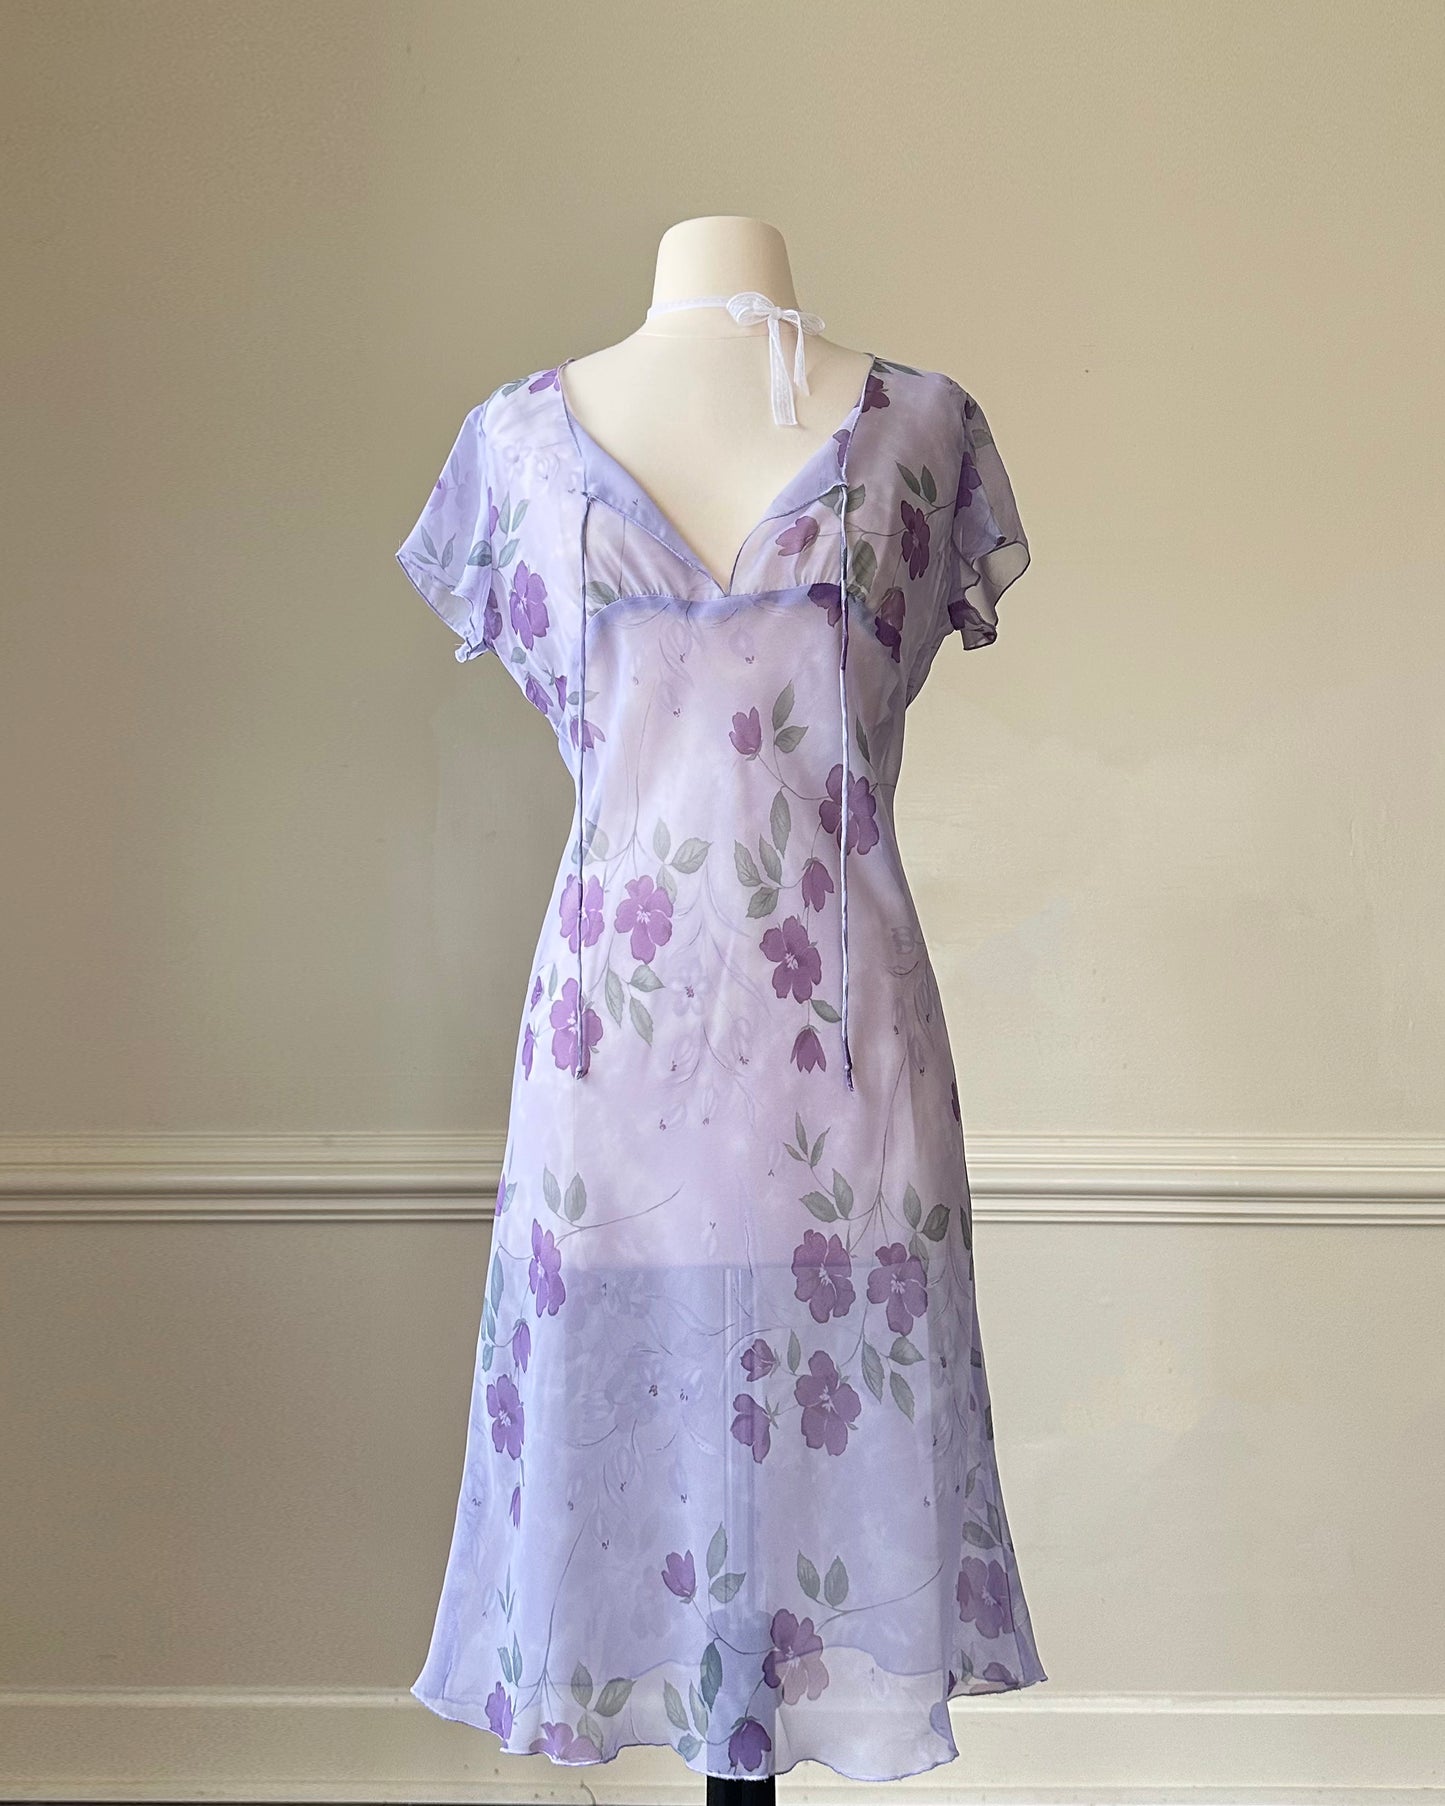 Stunning Vintage Sheer Purple Midi Dress featuring Watercolor Violet Prints